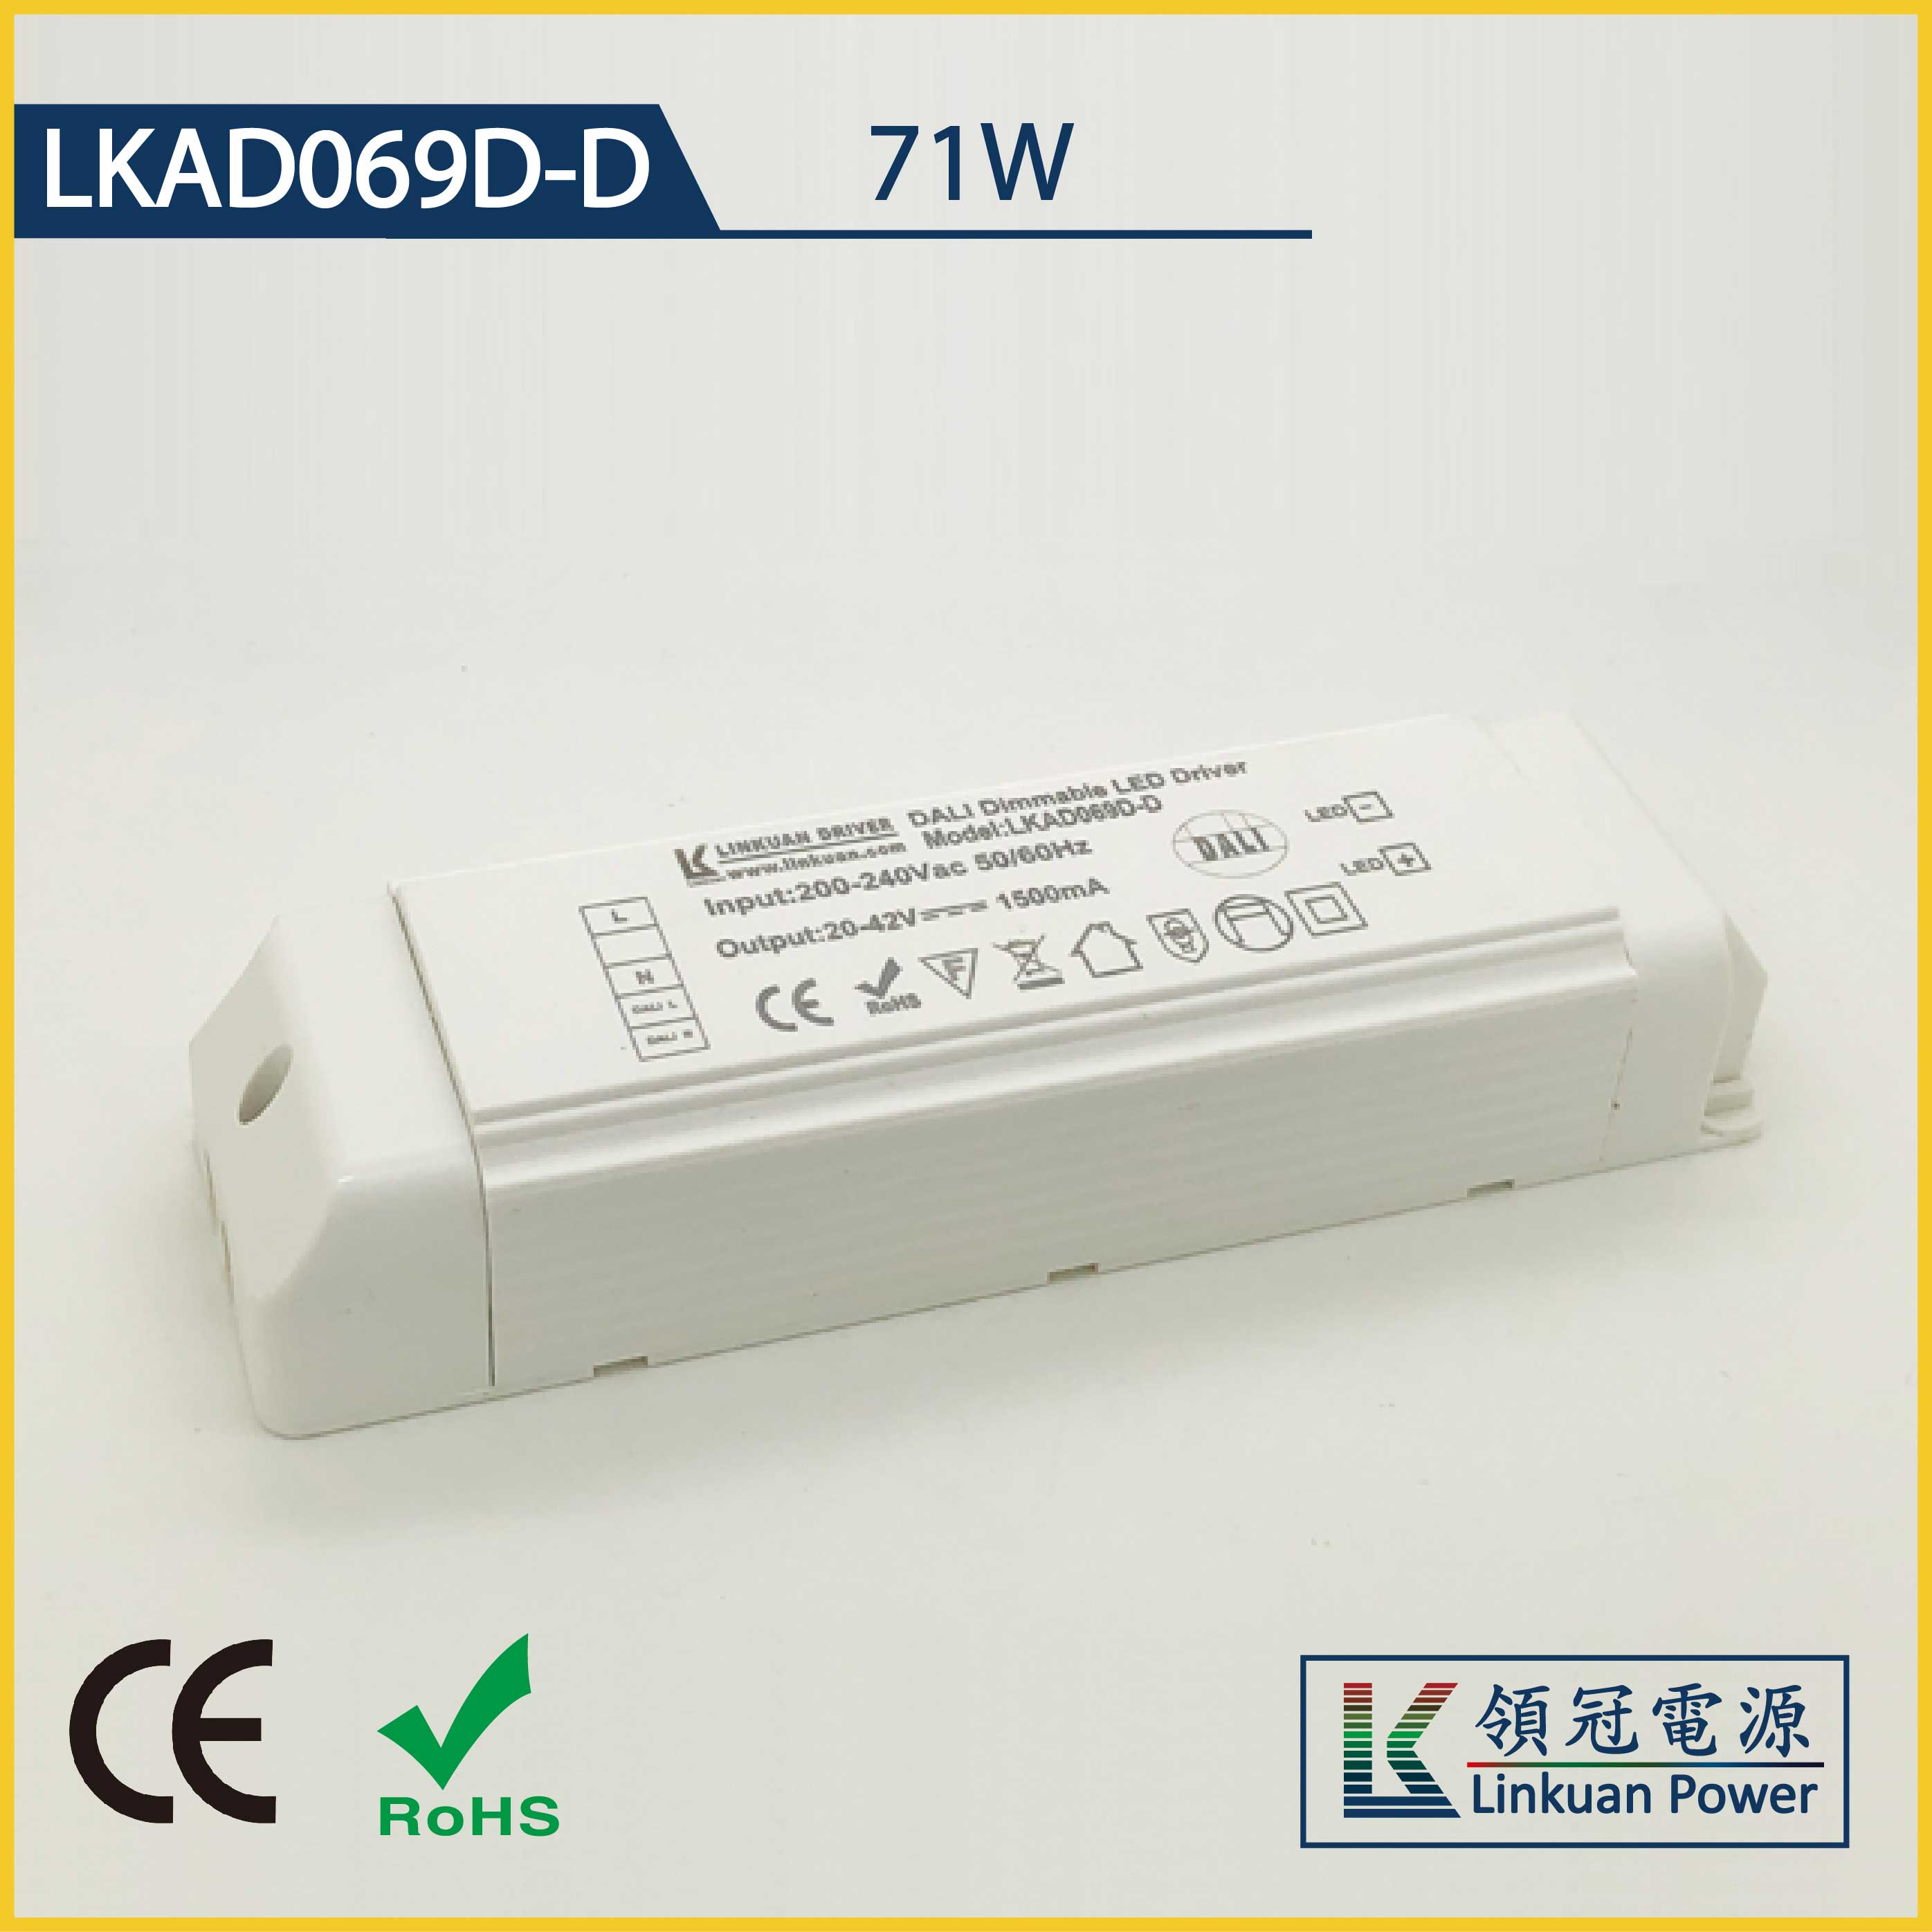 LKAD069D-D 71W 10-42V 1700mA DALI Dimming LED drivers